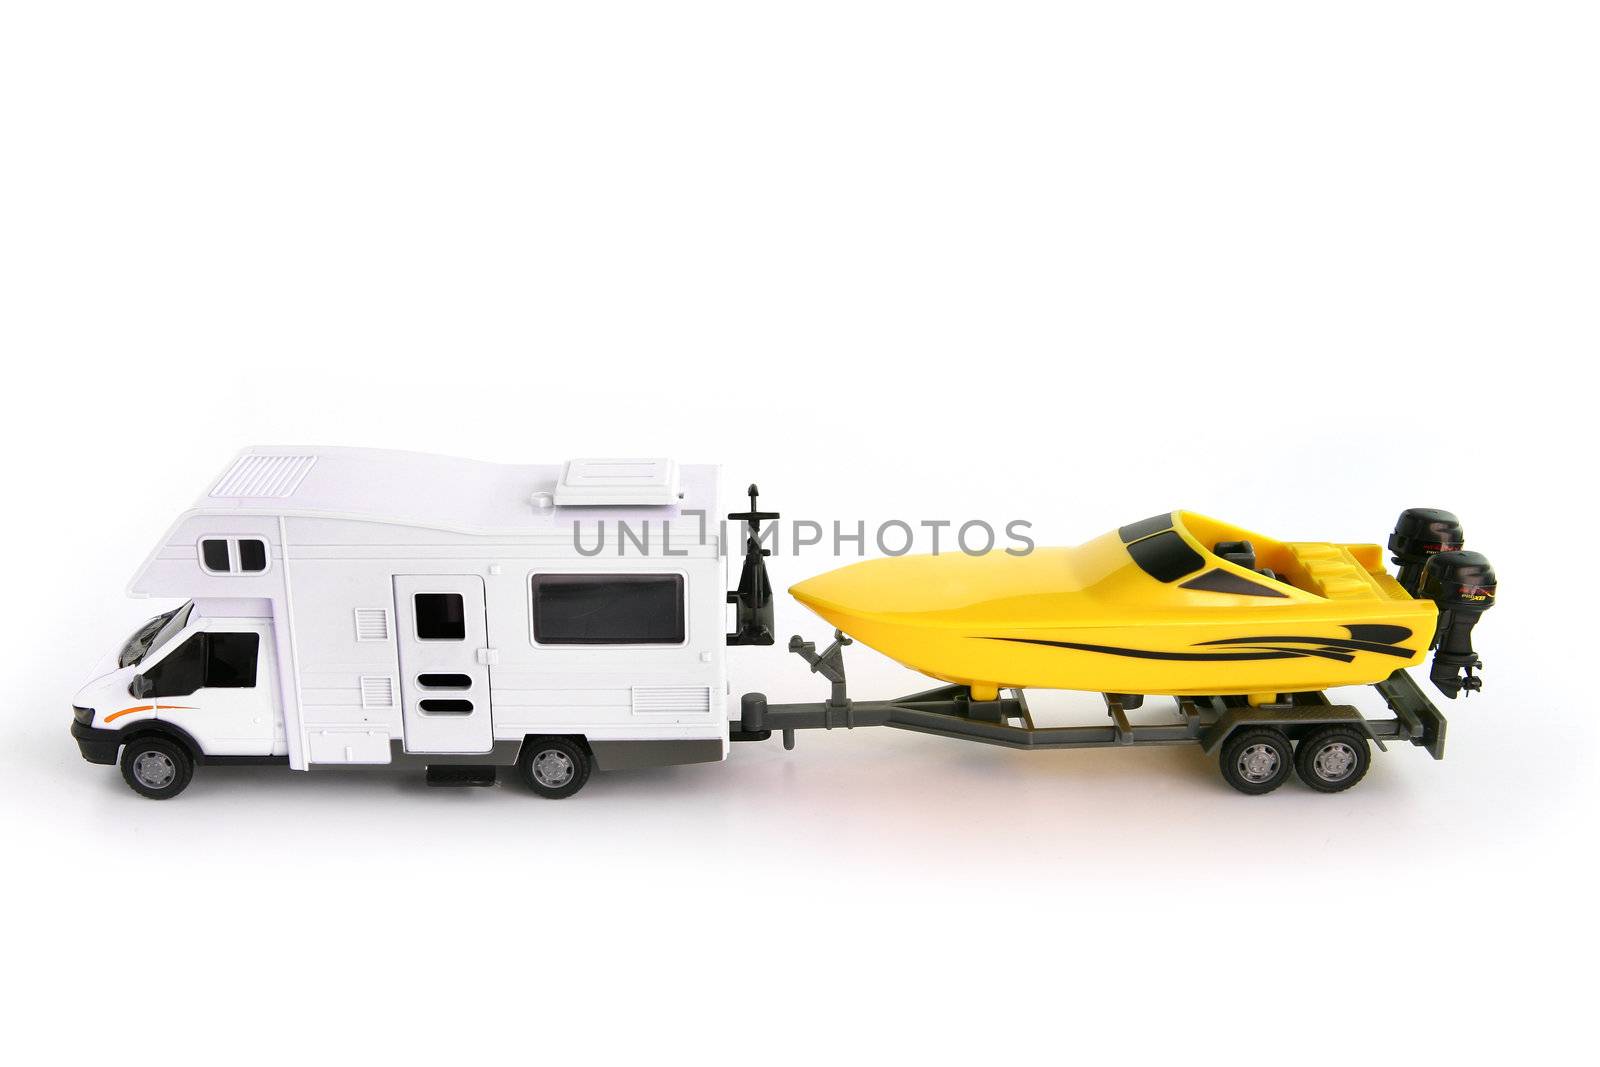 Toy camper van and speed boat by phovoir